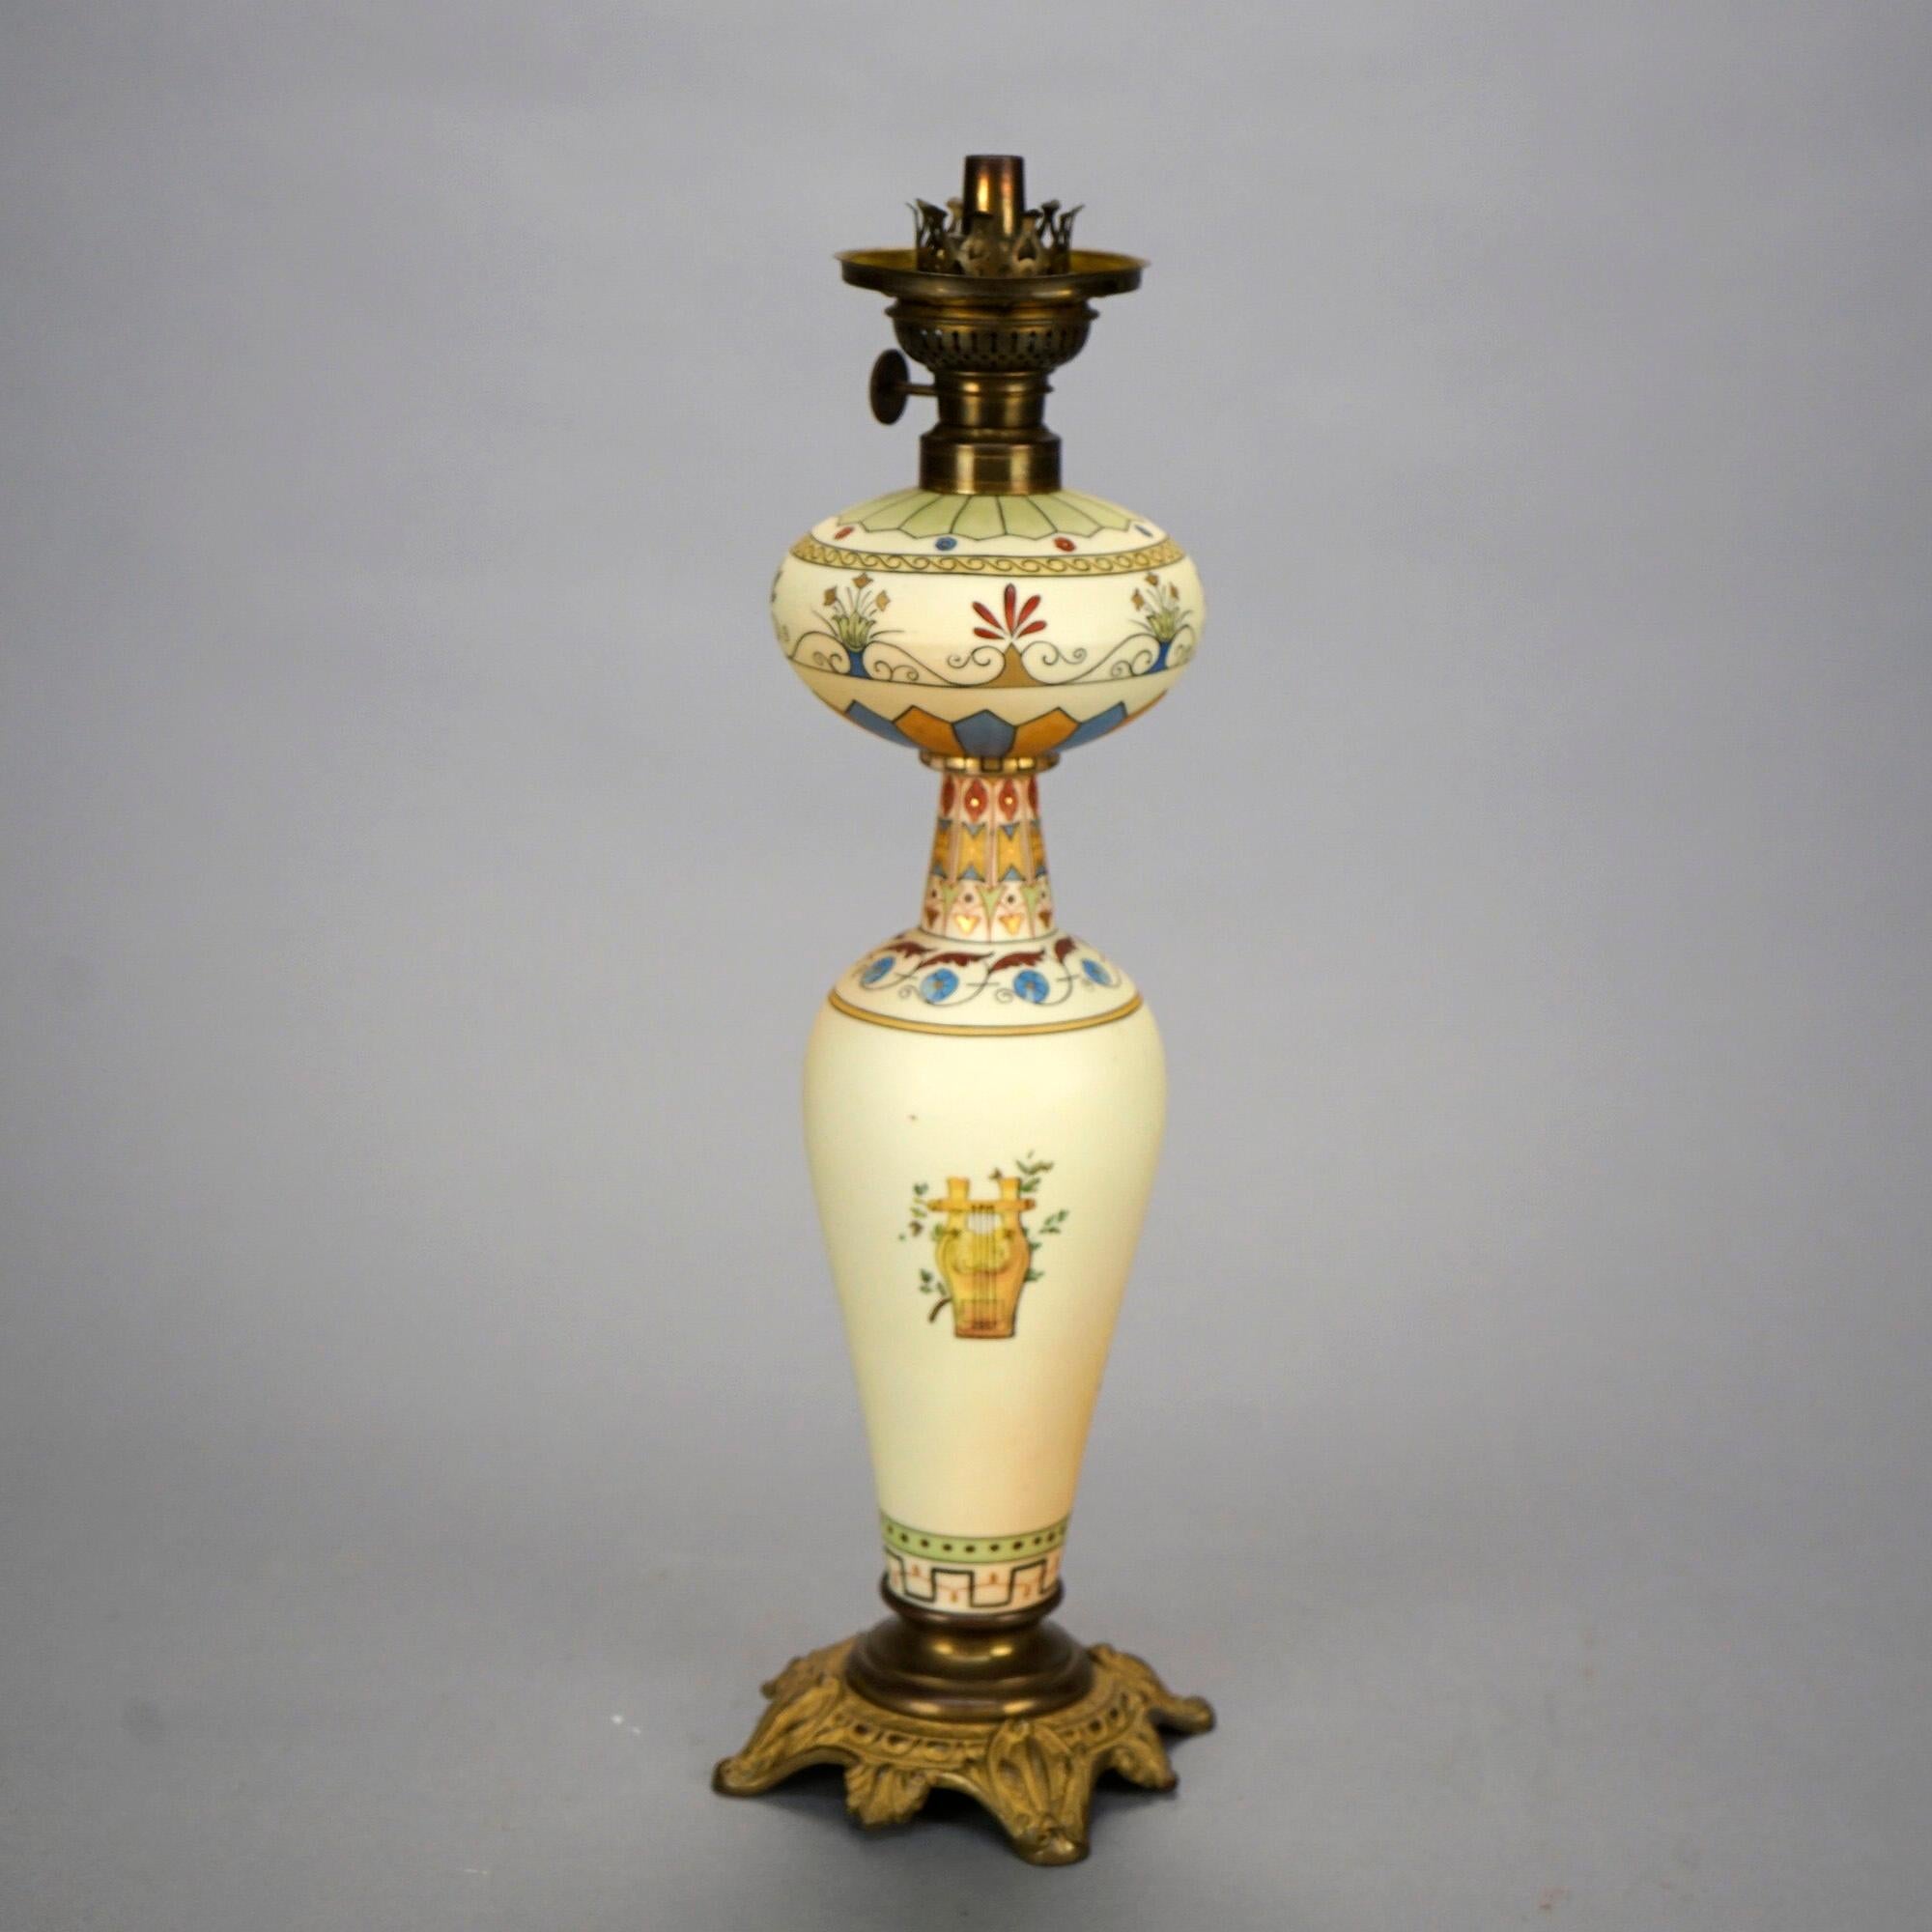 Antique Italian Hand Painted Porcelain Banquet Oil Lamp with Genre Scene, 19th C 2